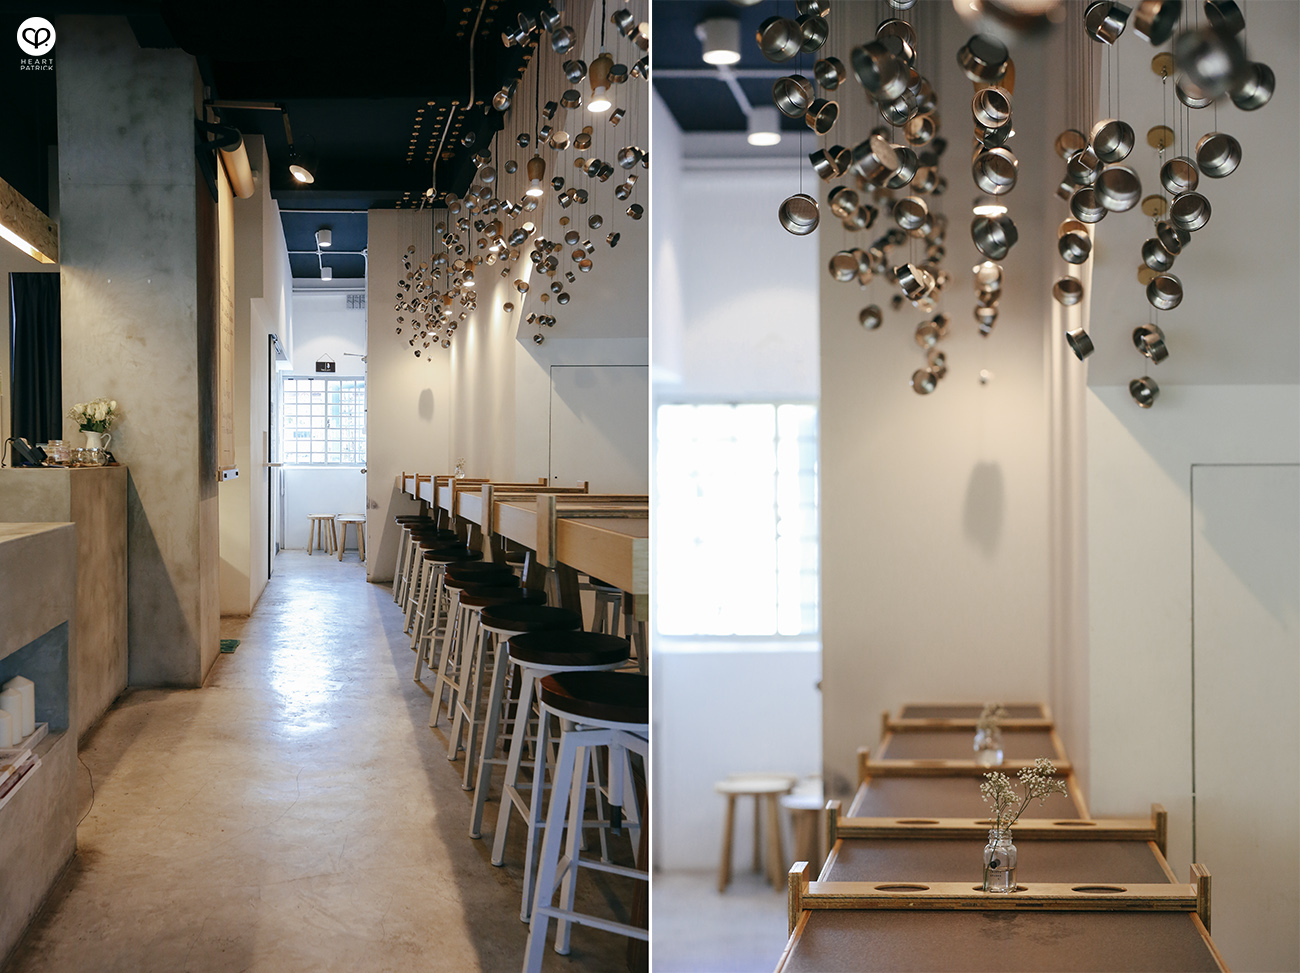 heartpatrick singapore caf cafehopping ang mo kio interior design industrial space